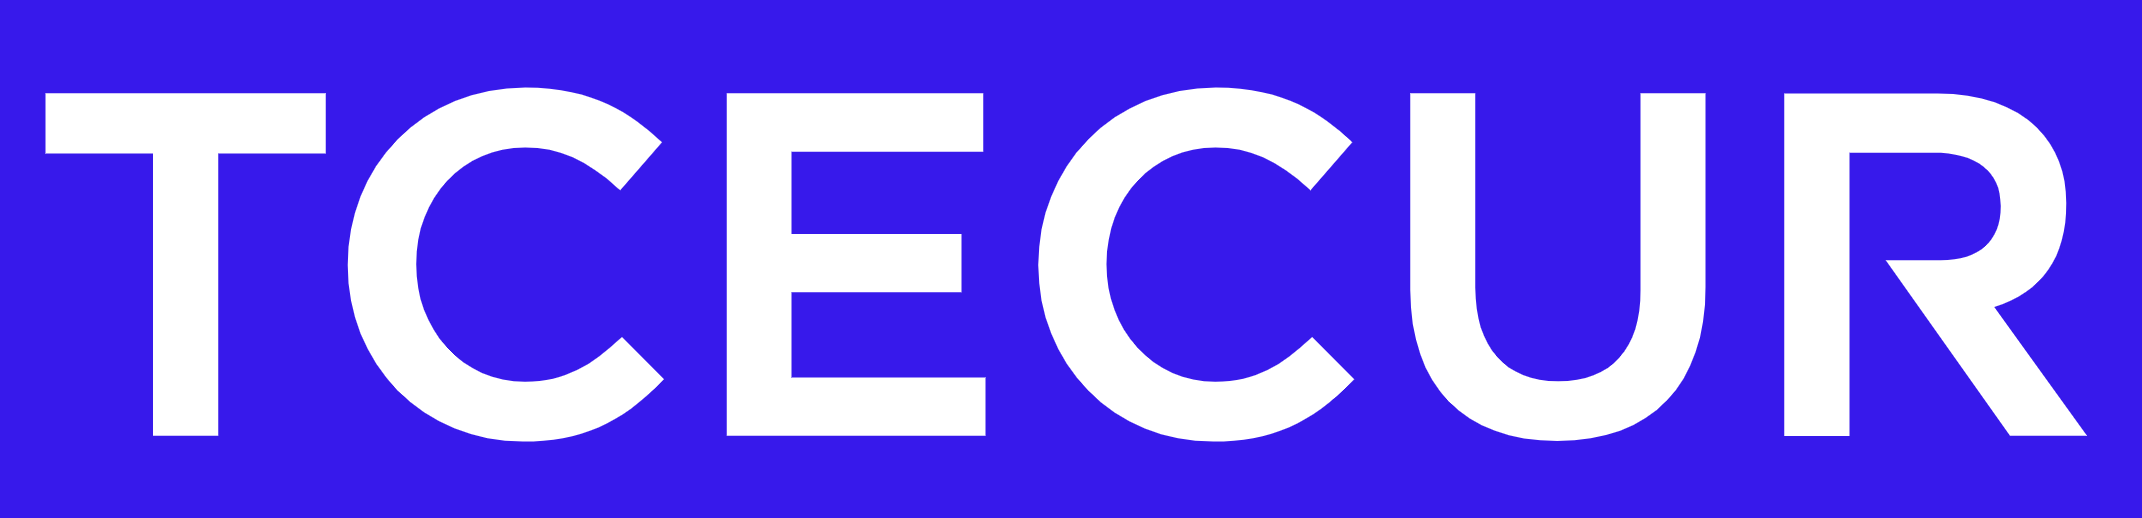 TCECUR logo